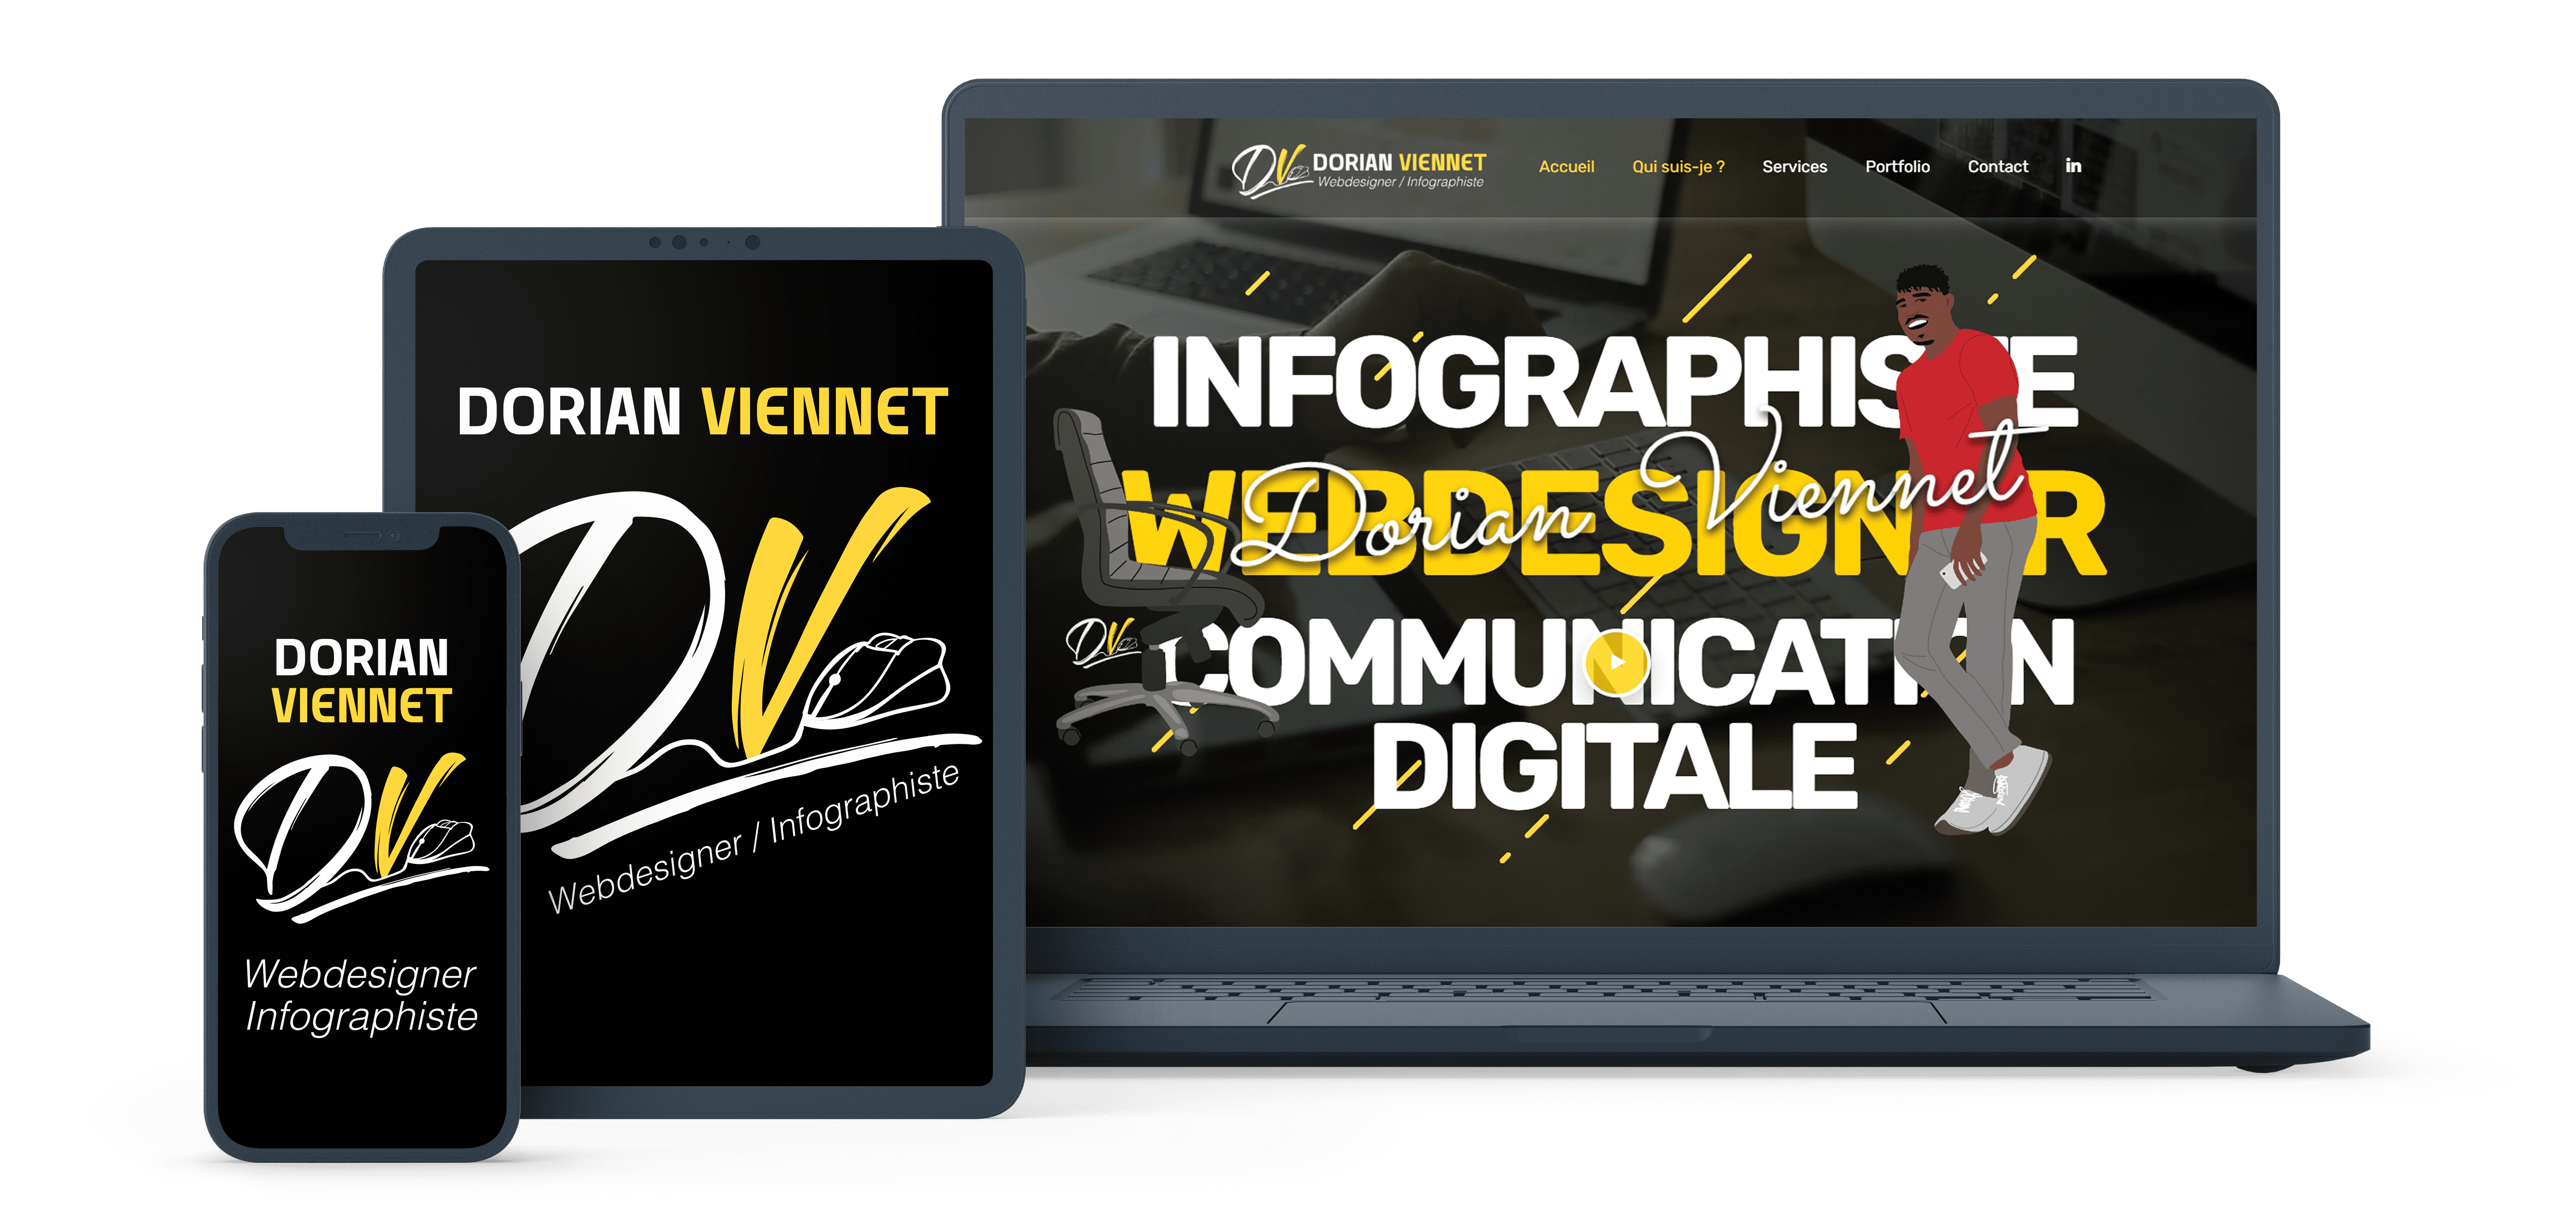 Dorian Viennet - Webdesigner / Infographiste 